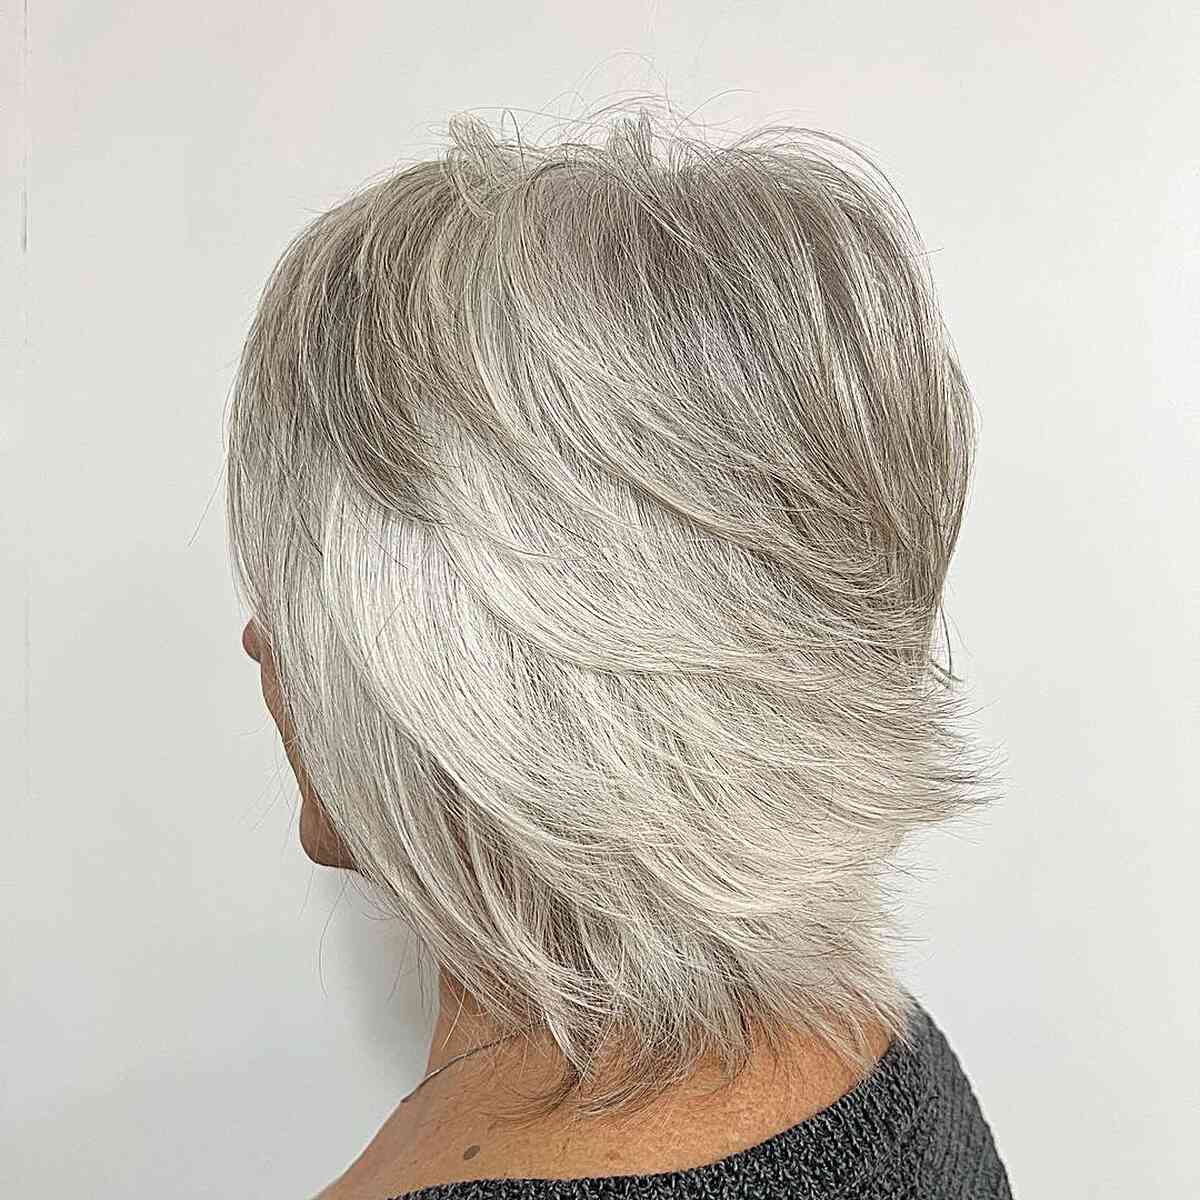 Choppy Multi-Layered Cut on Medium Short Silver Hair